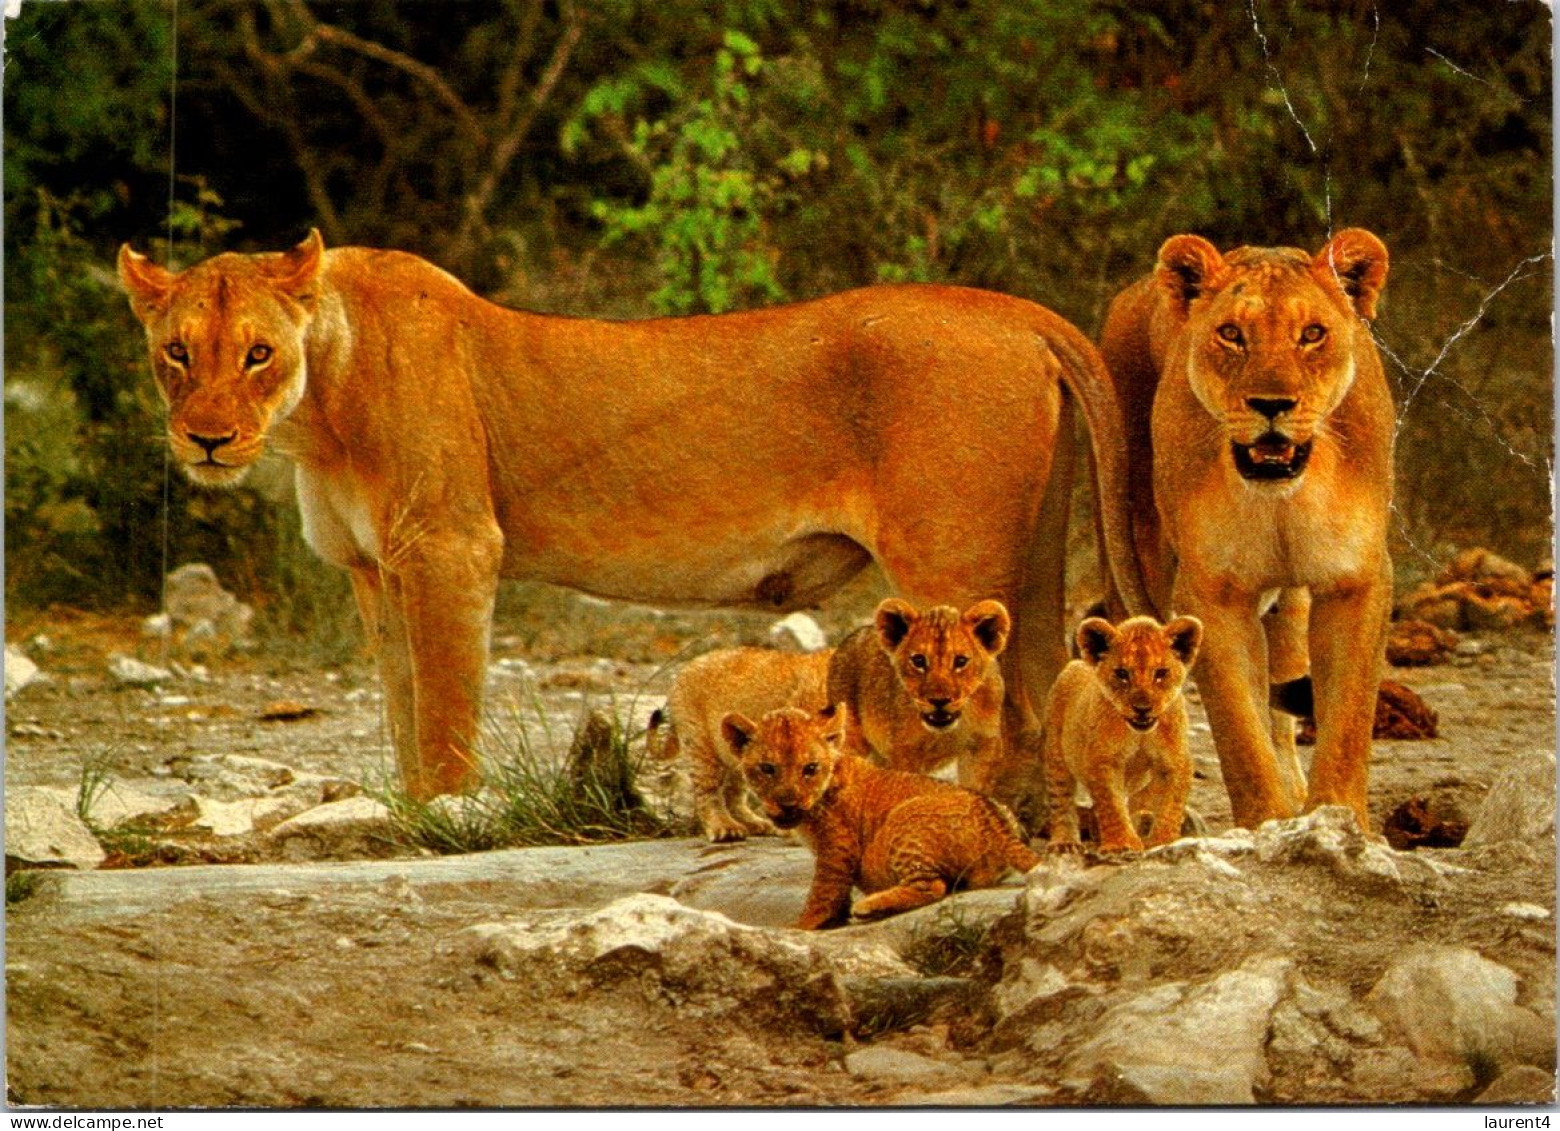 20-5-2024 (5 Z 38) South Africa (posted To Australia) Lion Family - Leeuwen